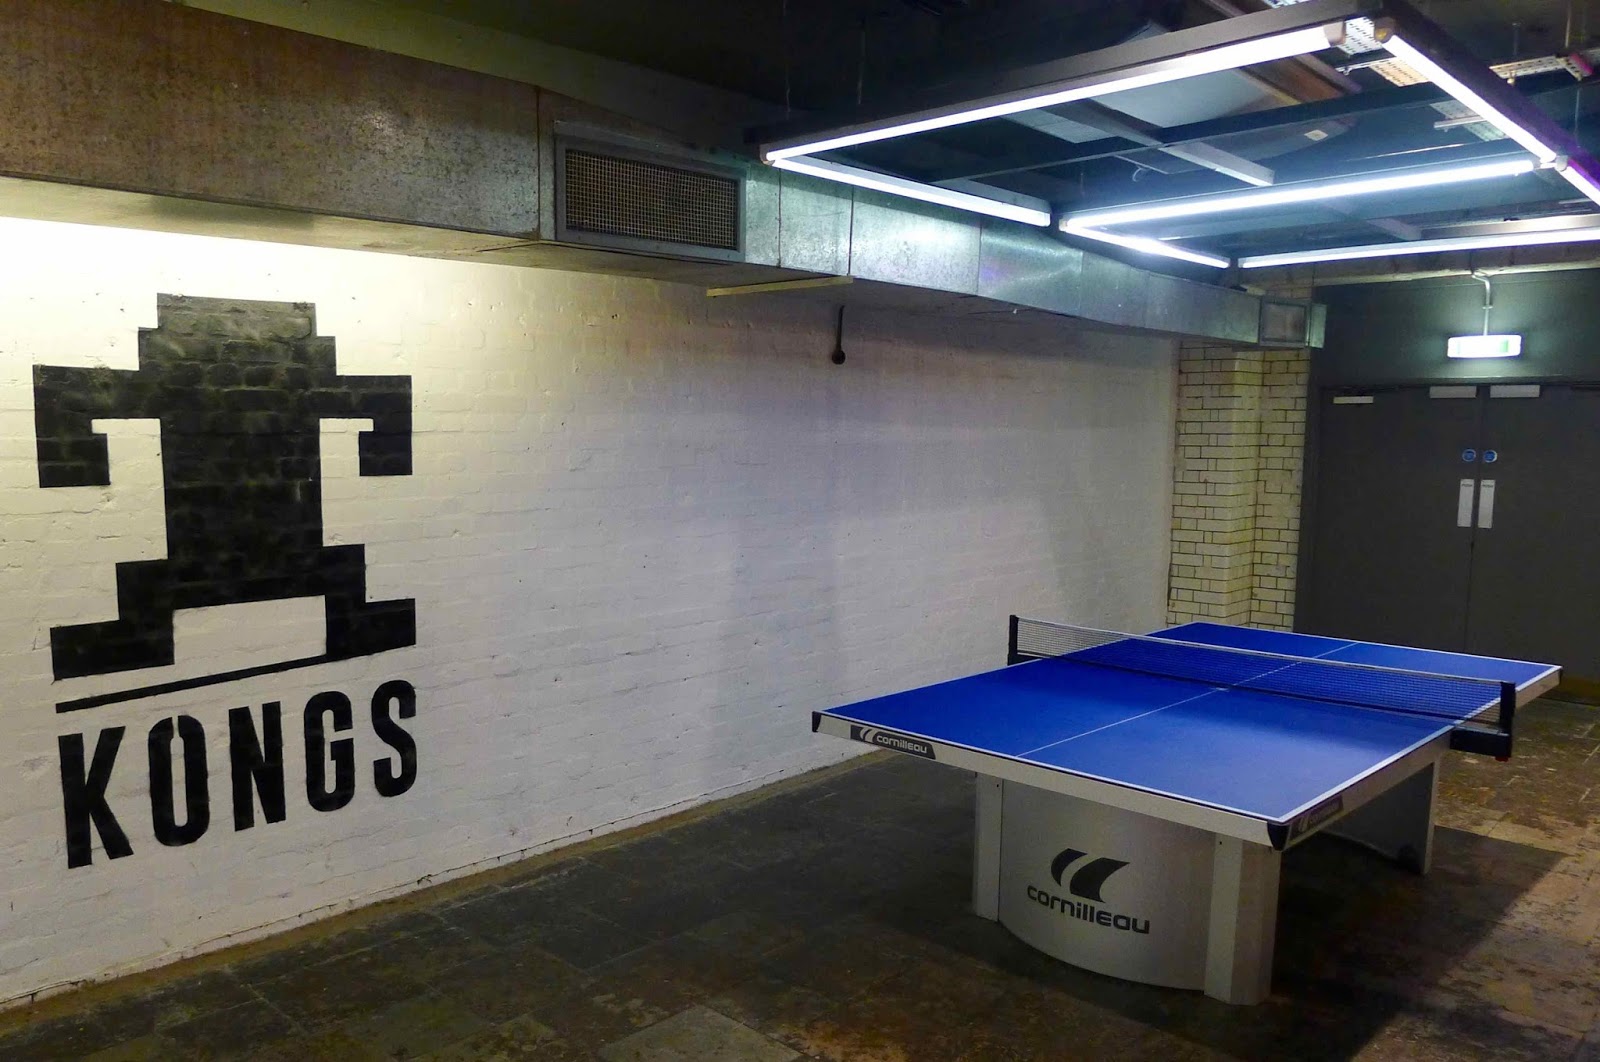 Cardiff City Table Tennis Club — SPORT CARDIFF